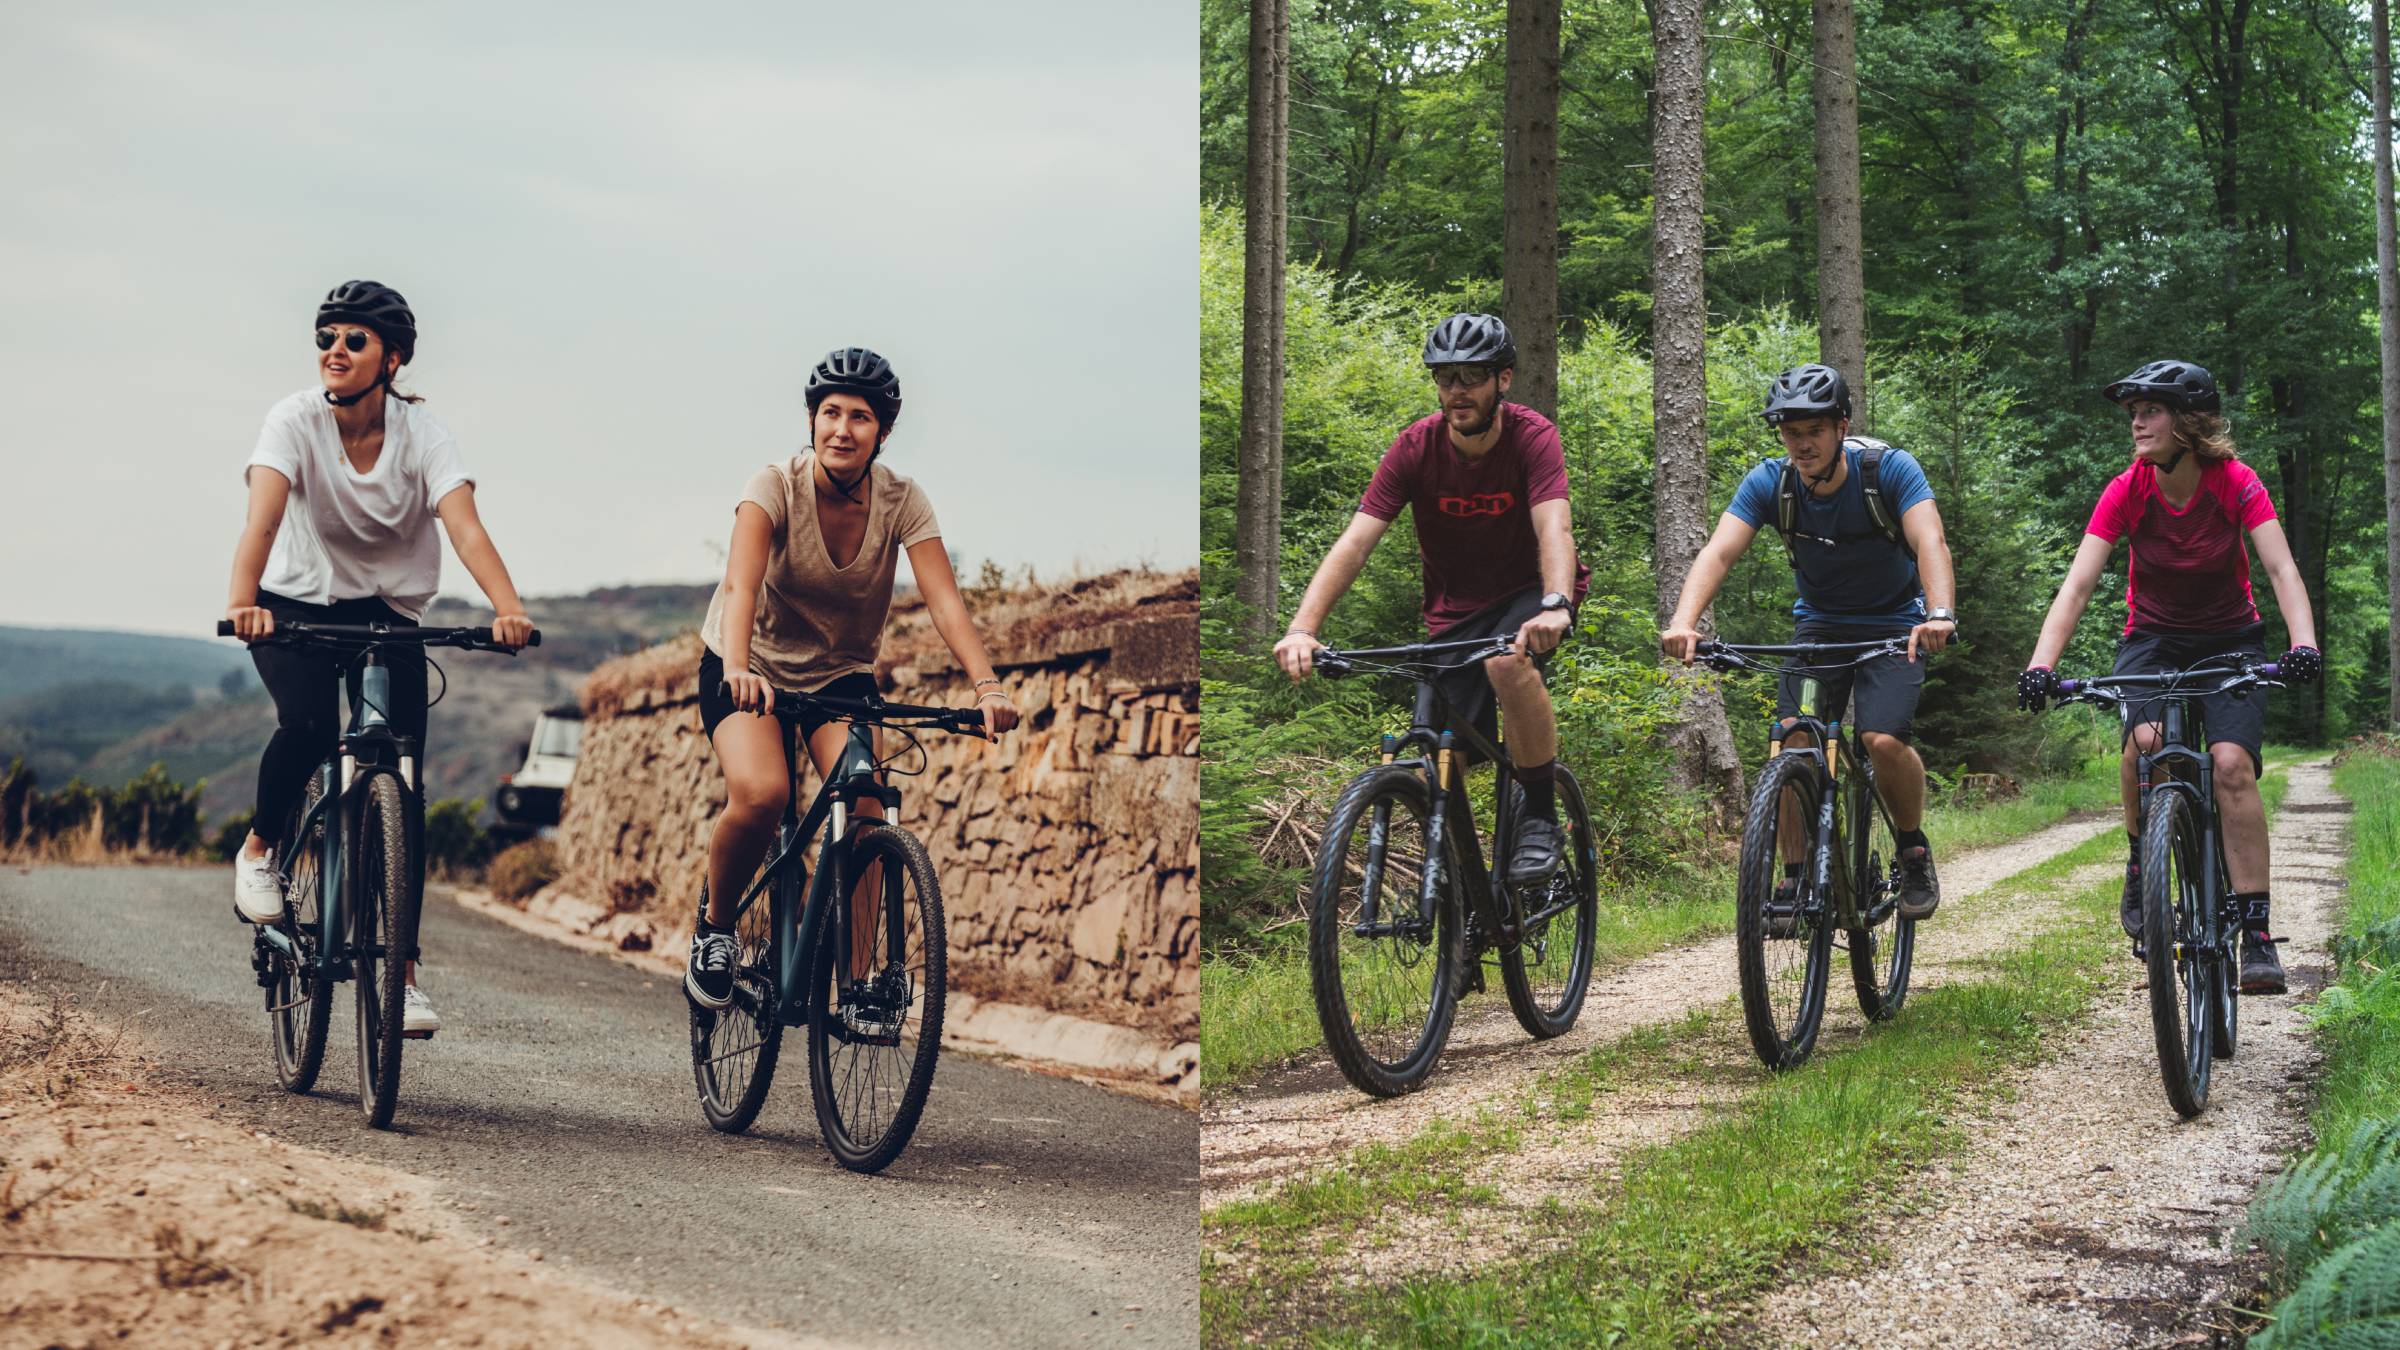 Vernietigen Speels tack Mountainbike of hybride fiets - welke is beter? | CANYON NL